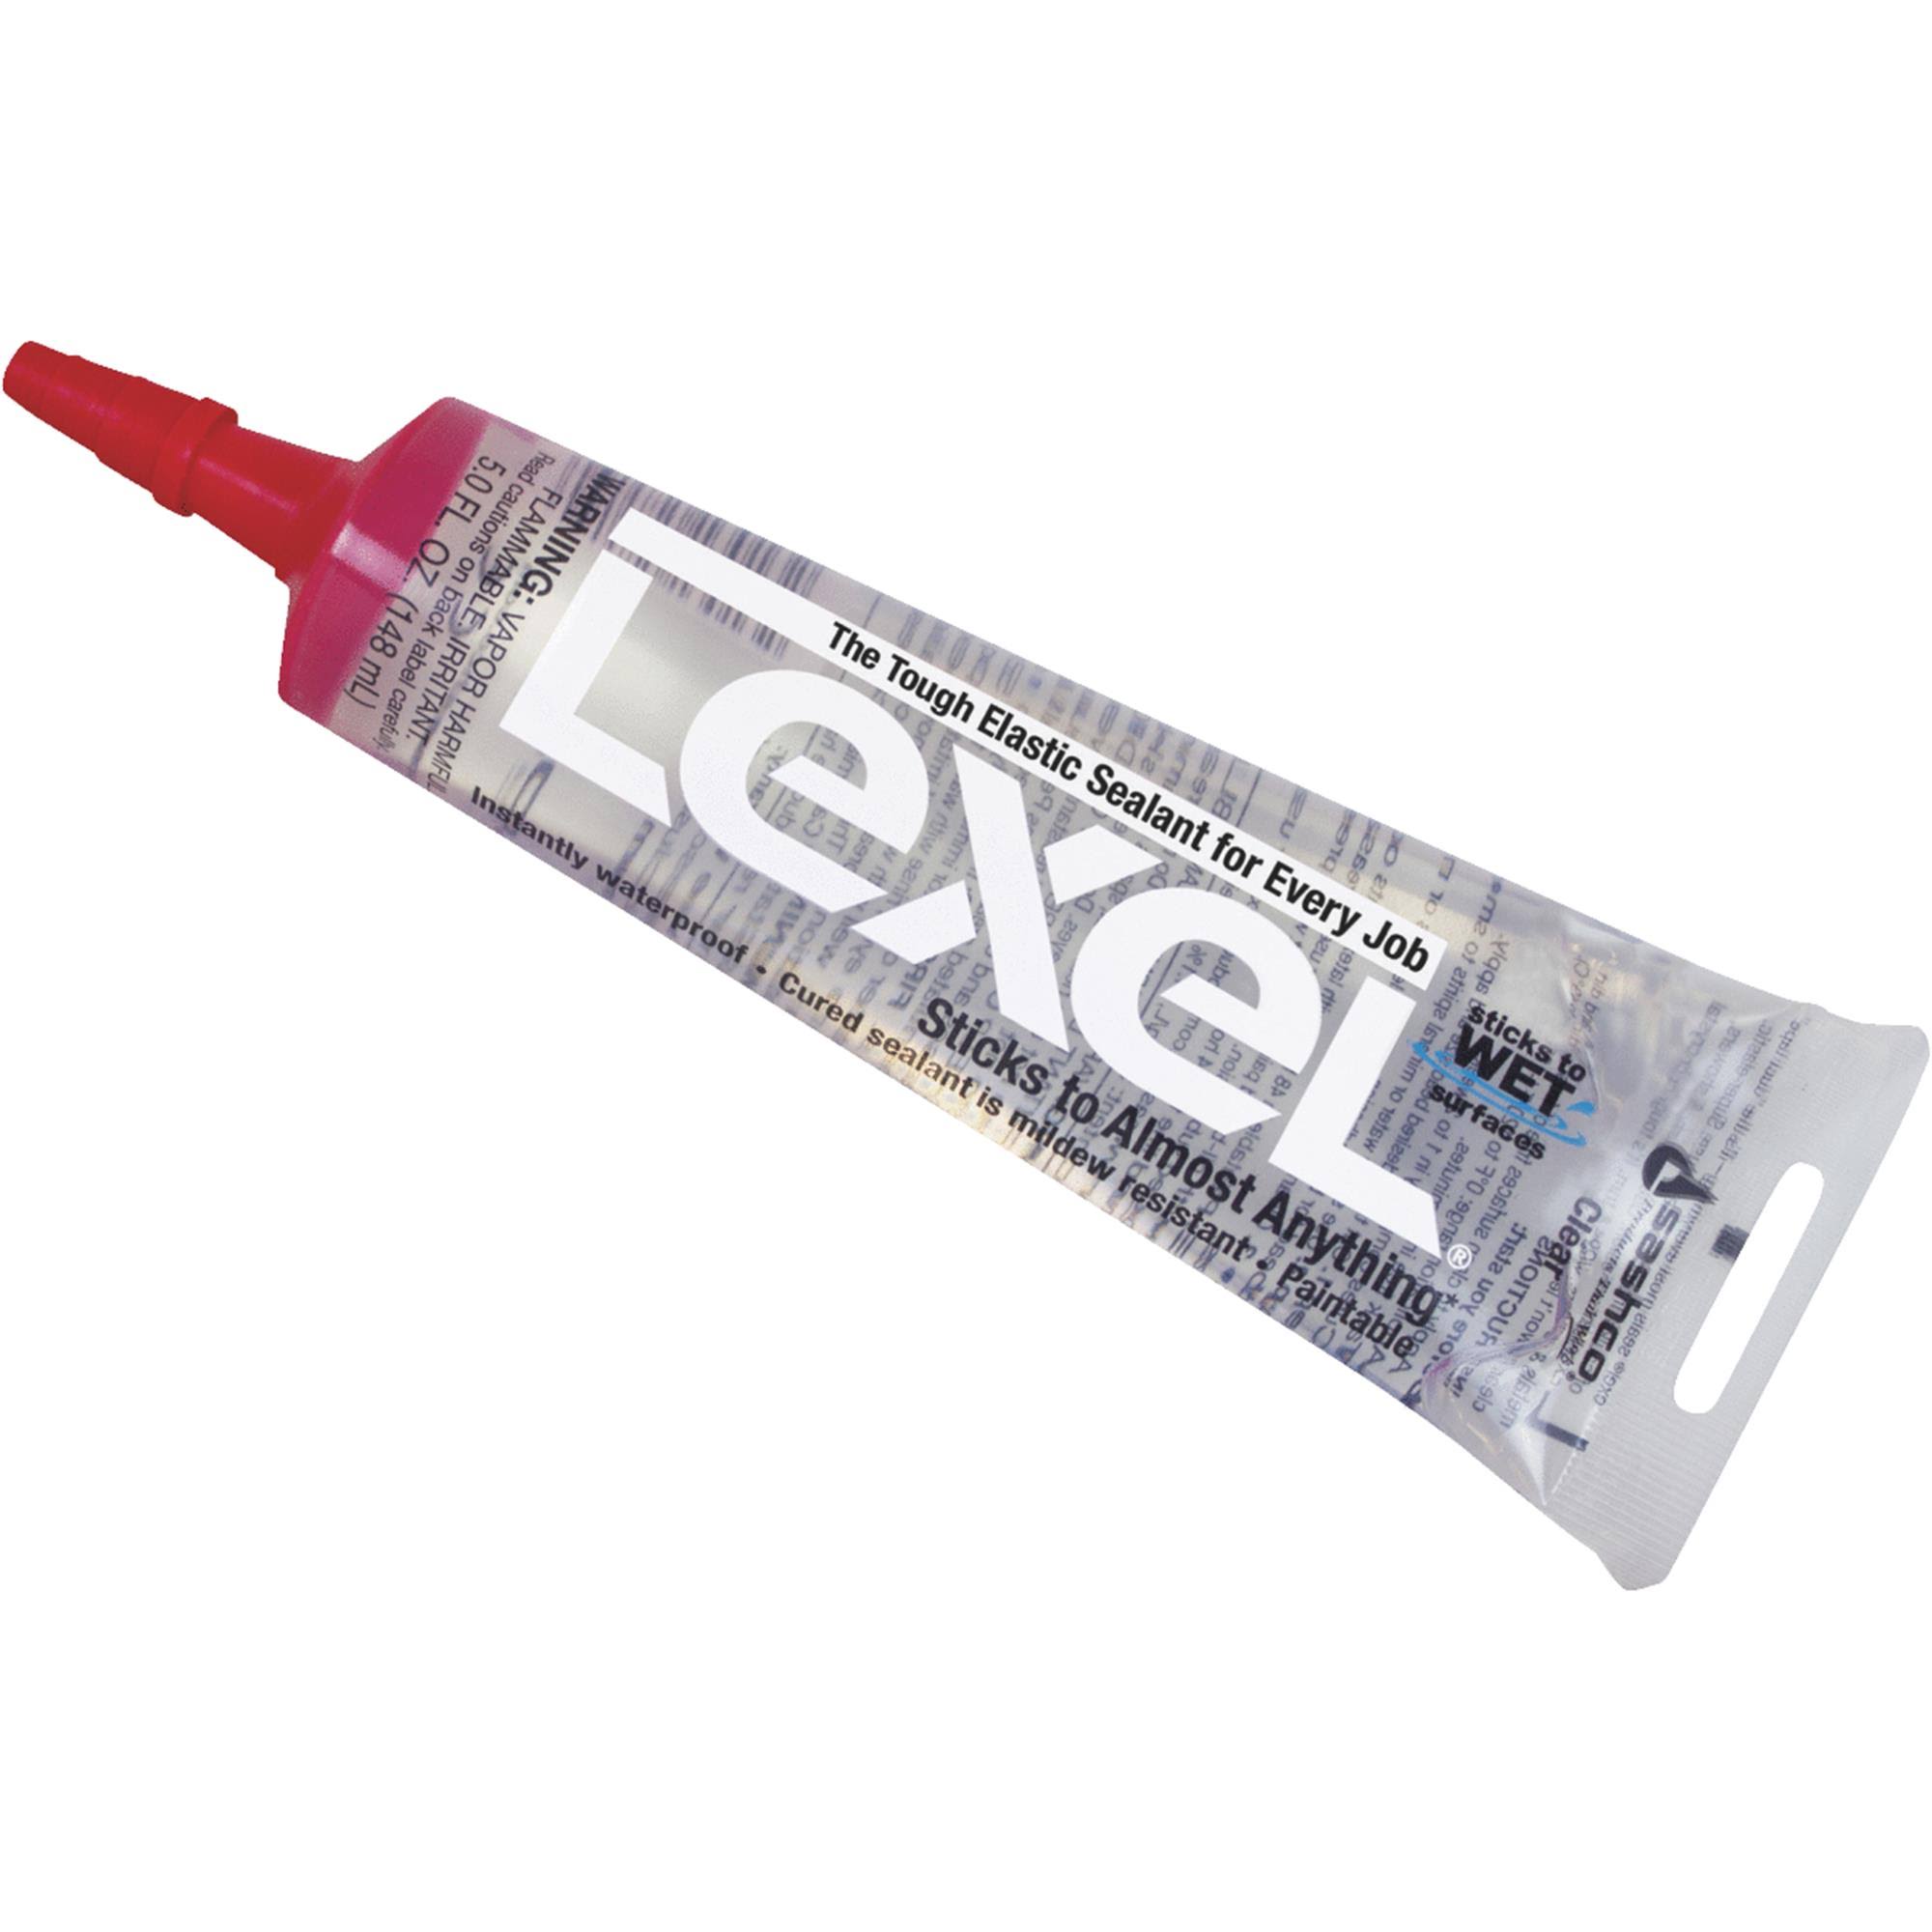 Lexel Weatherproofing Caulk - 148ml